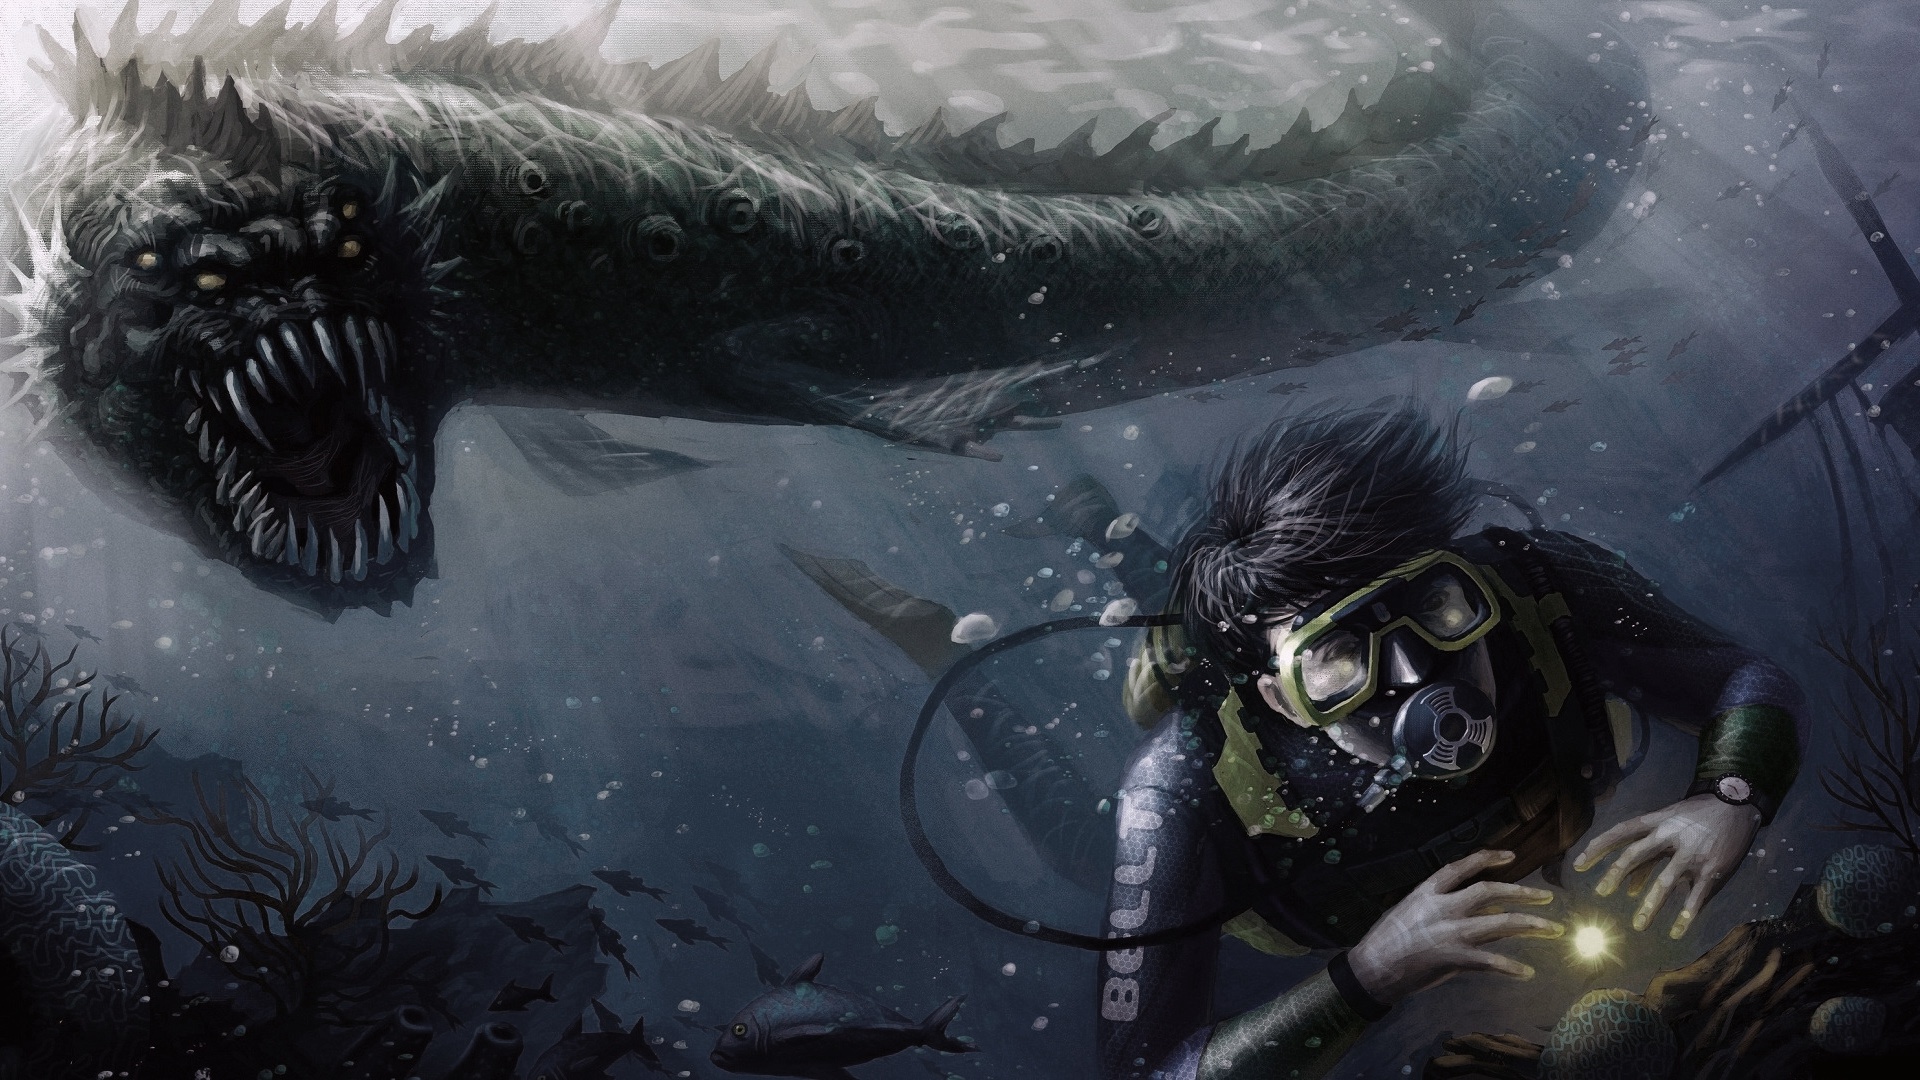 HD desktop wallpaper: Fantasy, Underwater, Monster, Diving, Scuba Diver, Sea Monster download free picture